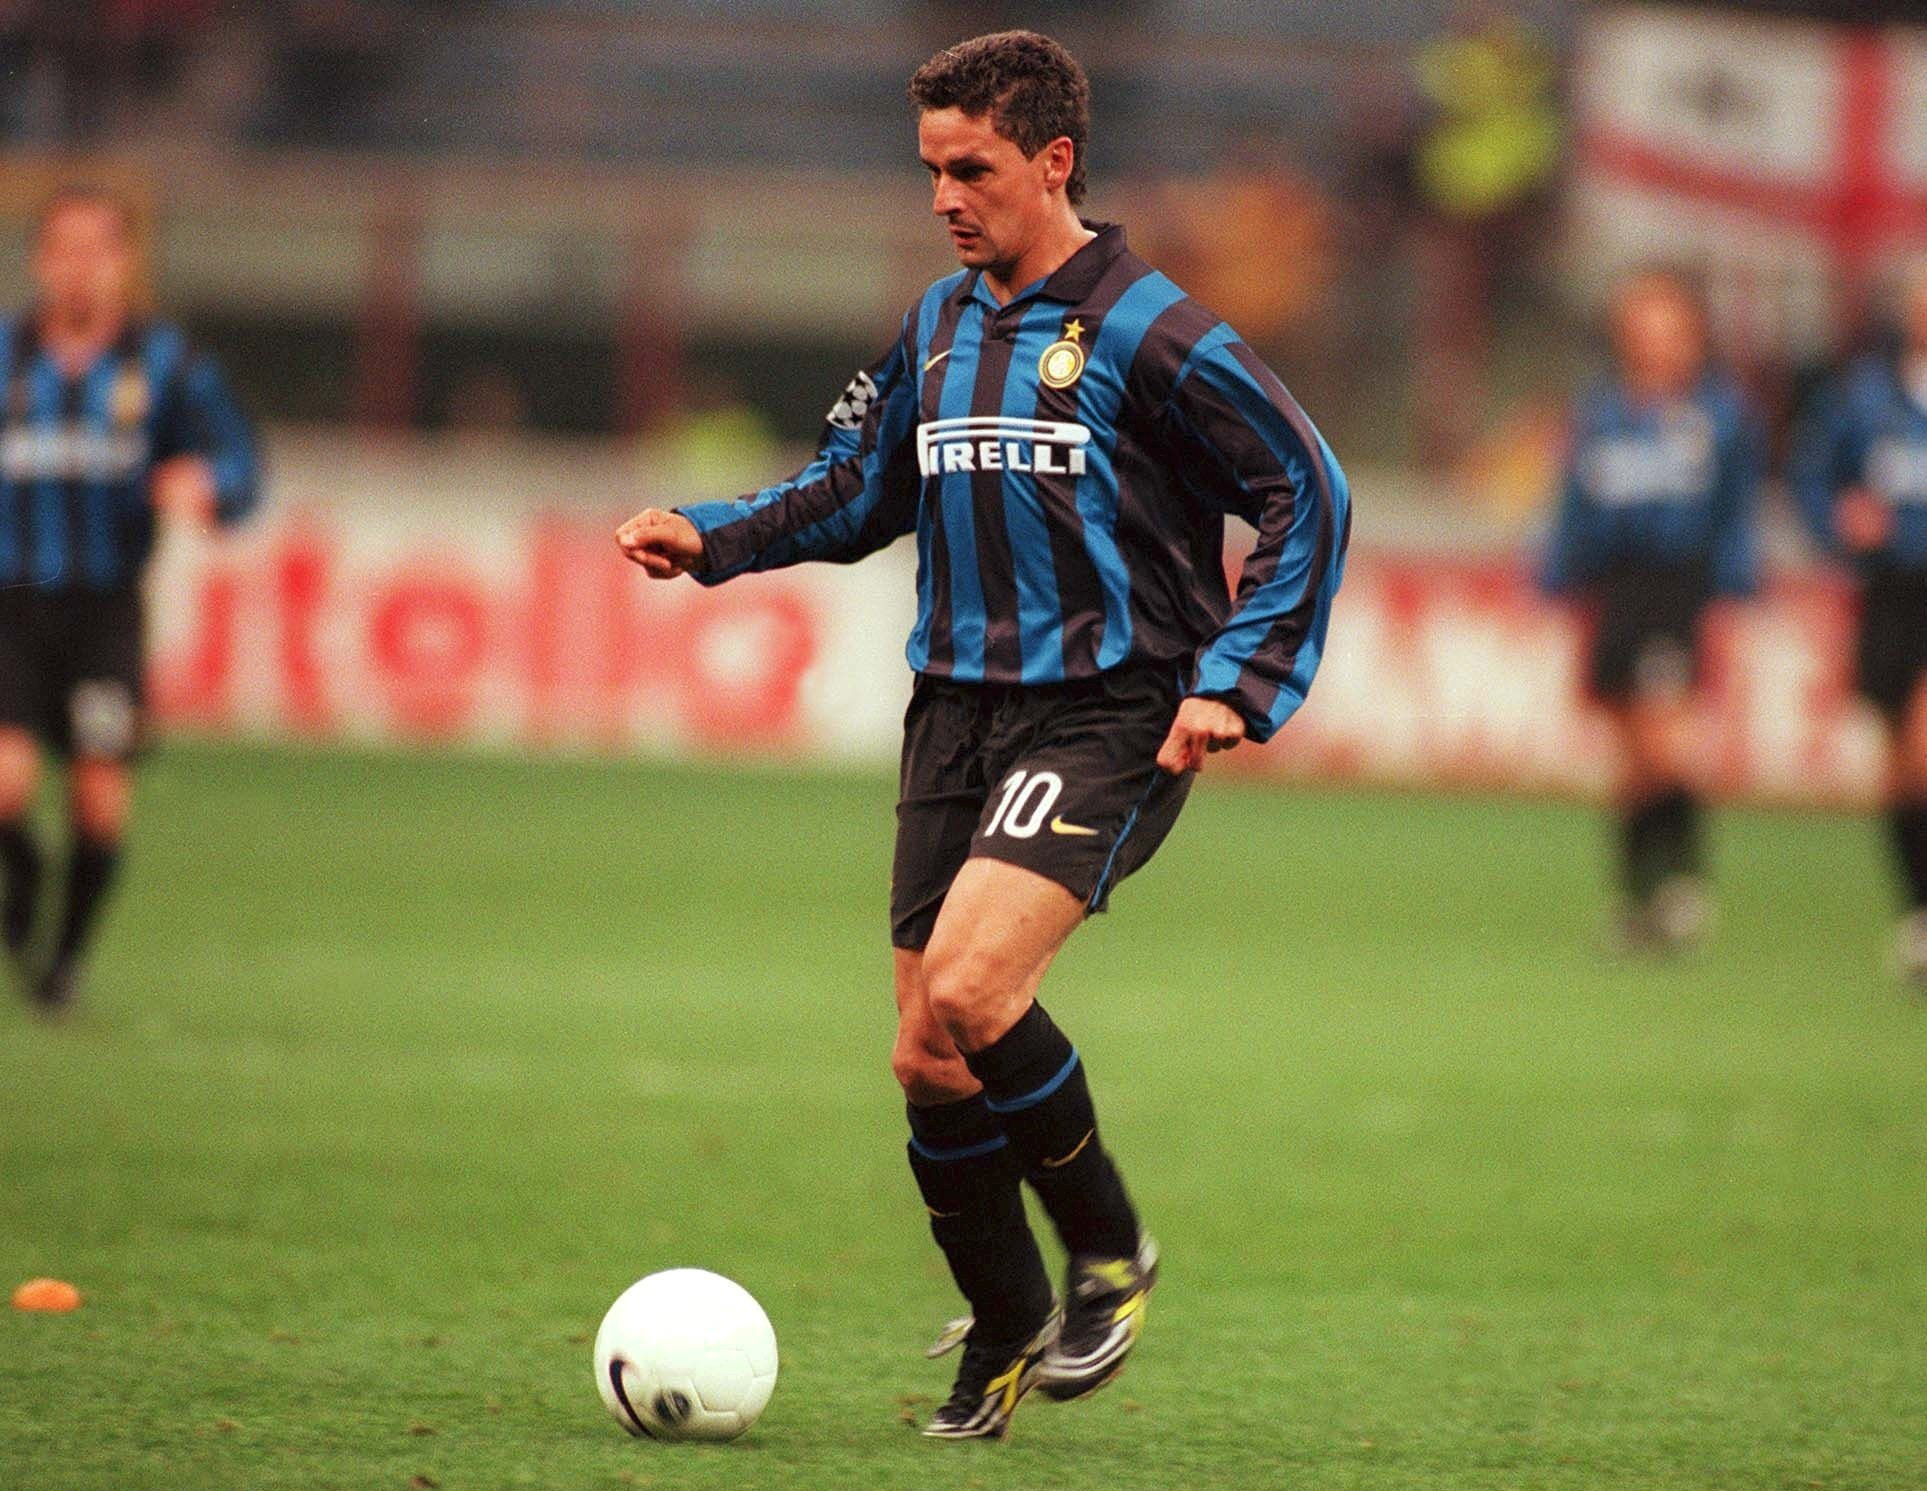 Roberto Baggio: “I Was Very Happy To Wear The Inter Shirt”